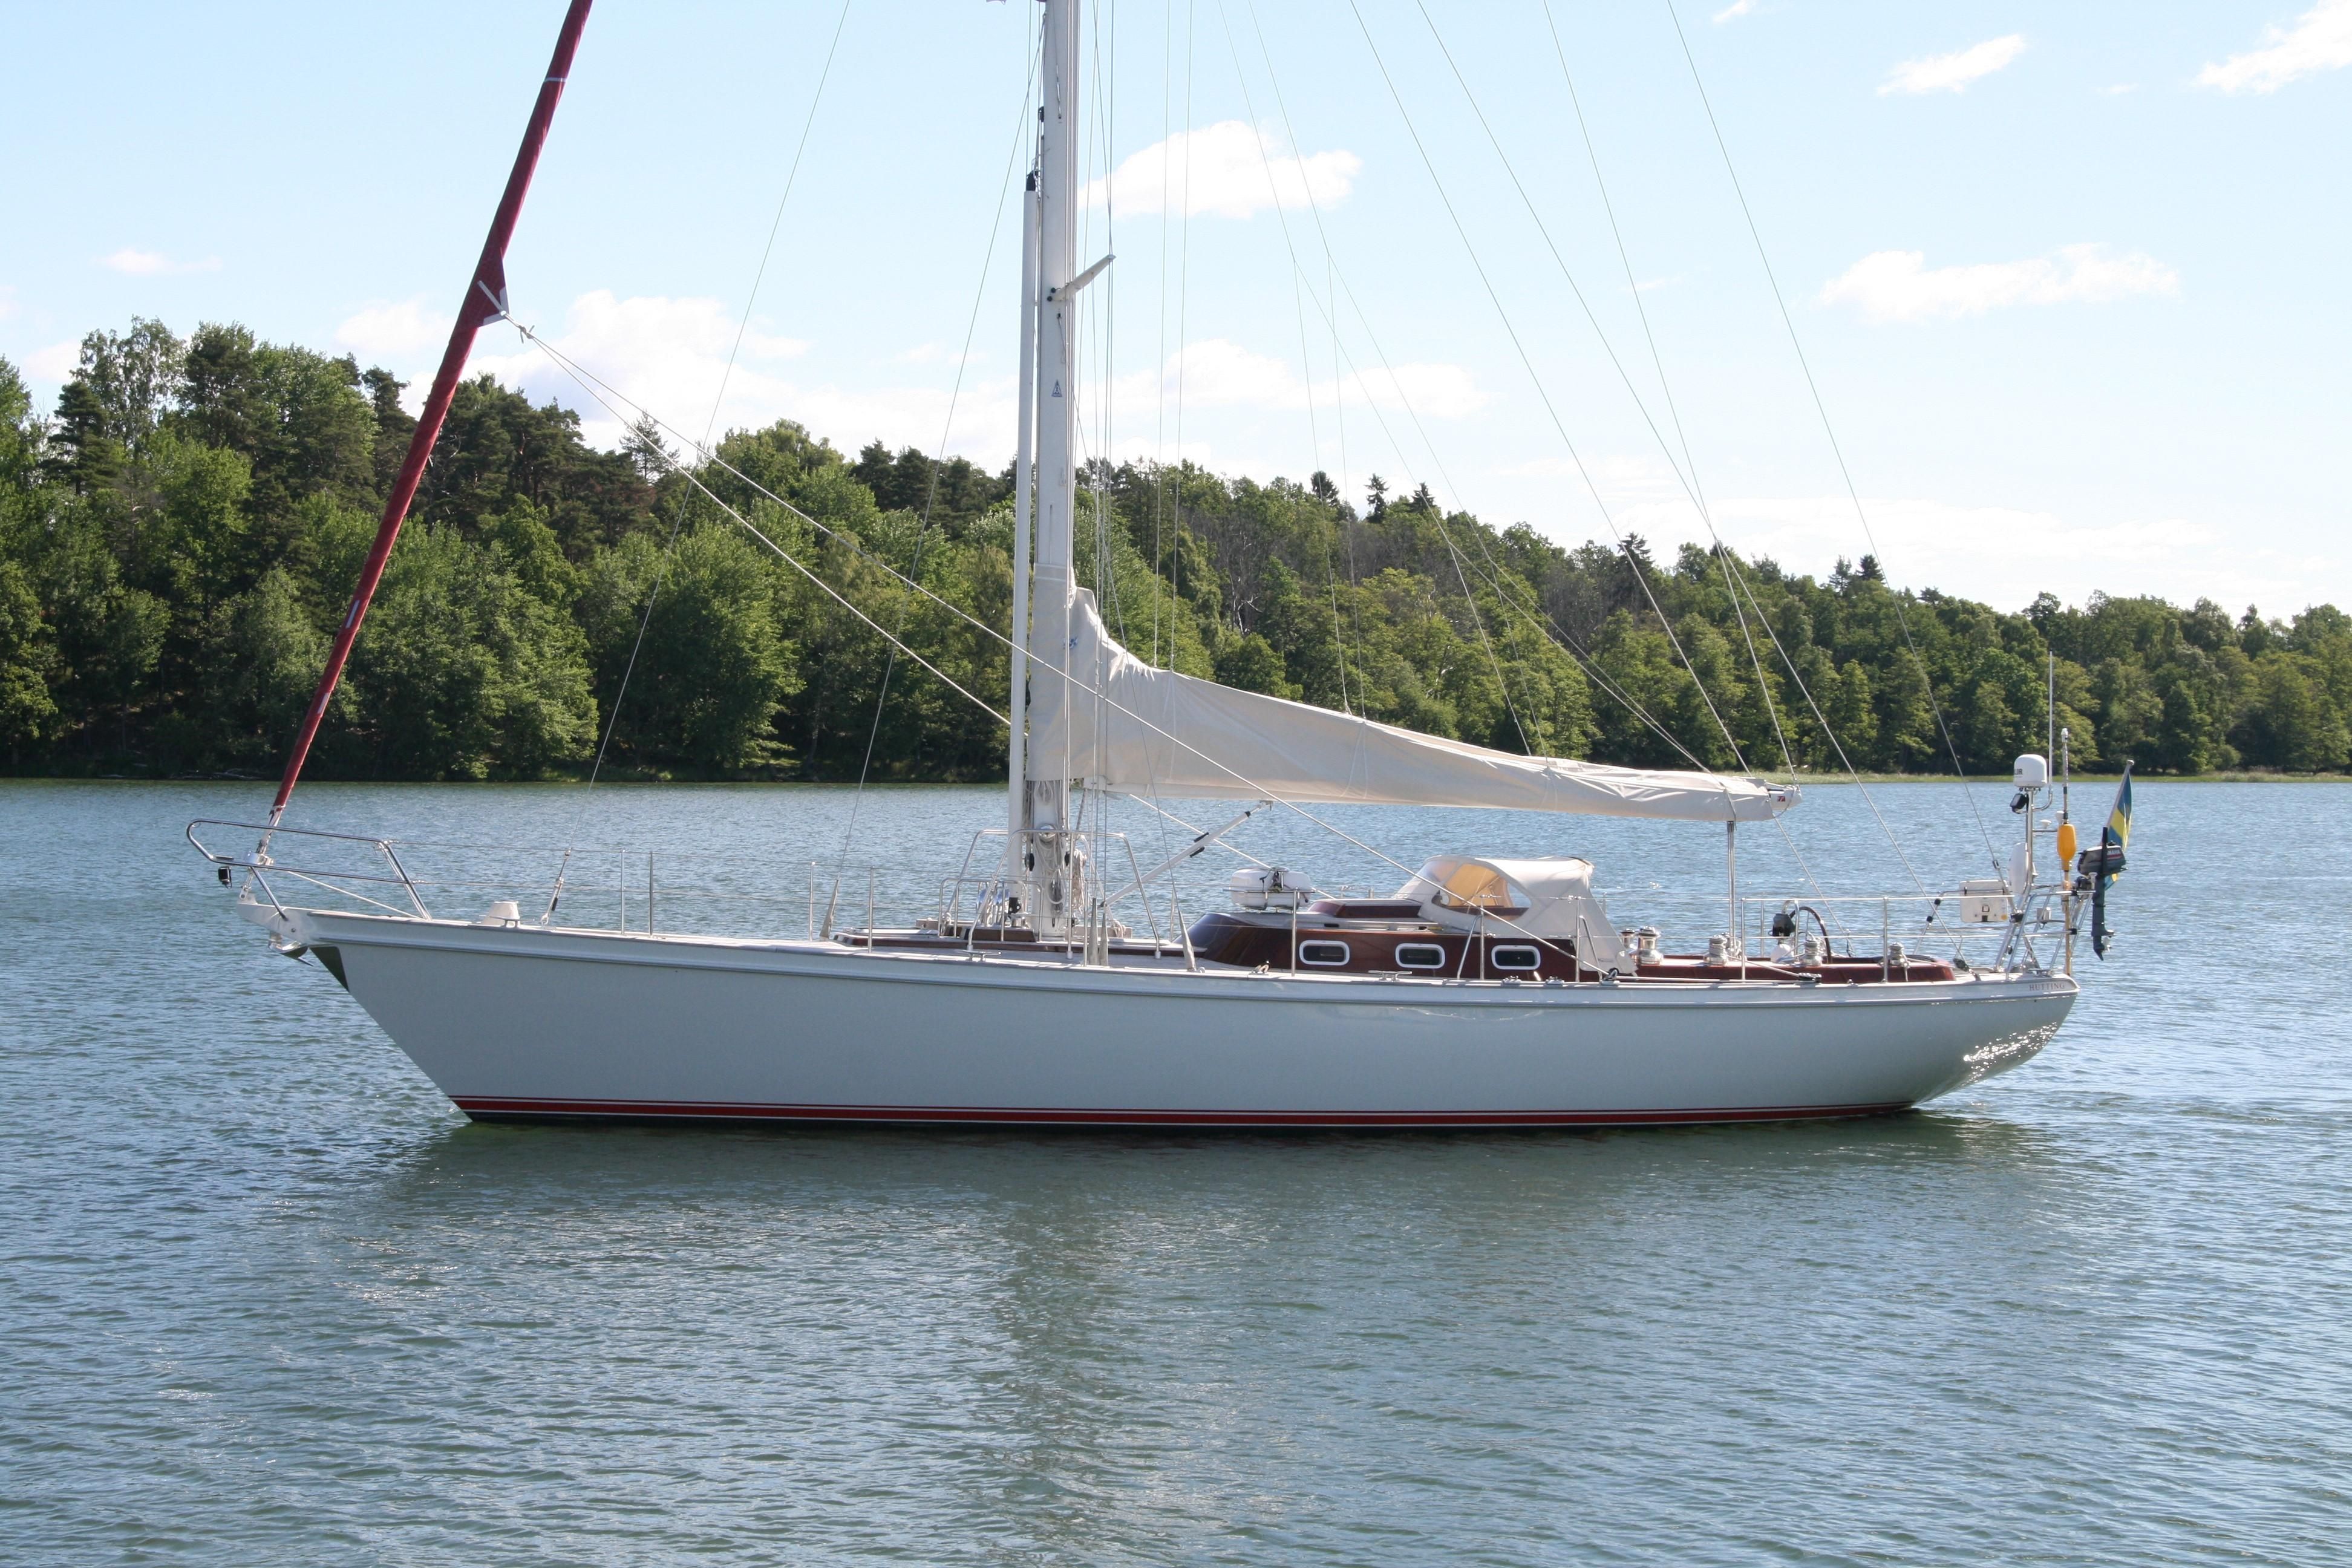 2001 Hutting 48 Sail Boat For Sale Wwwyachtworldcom